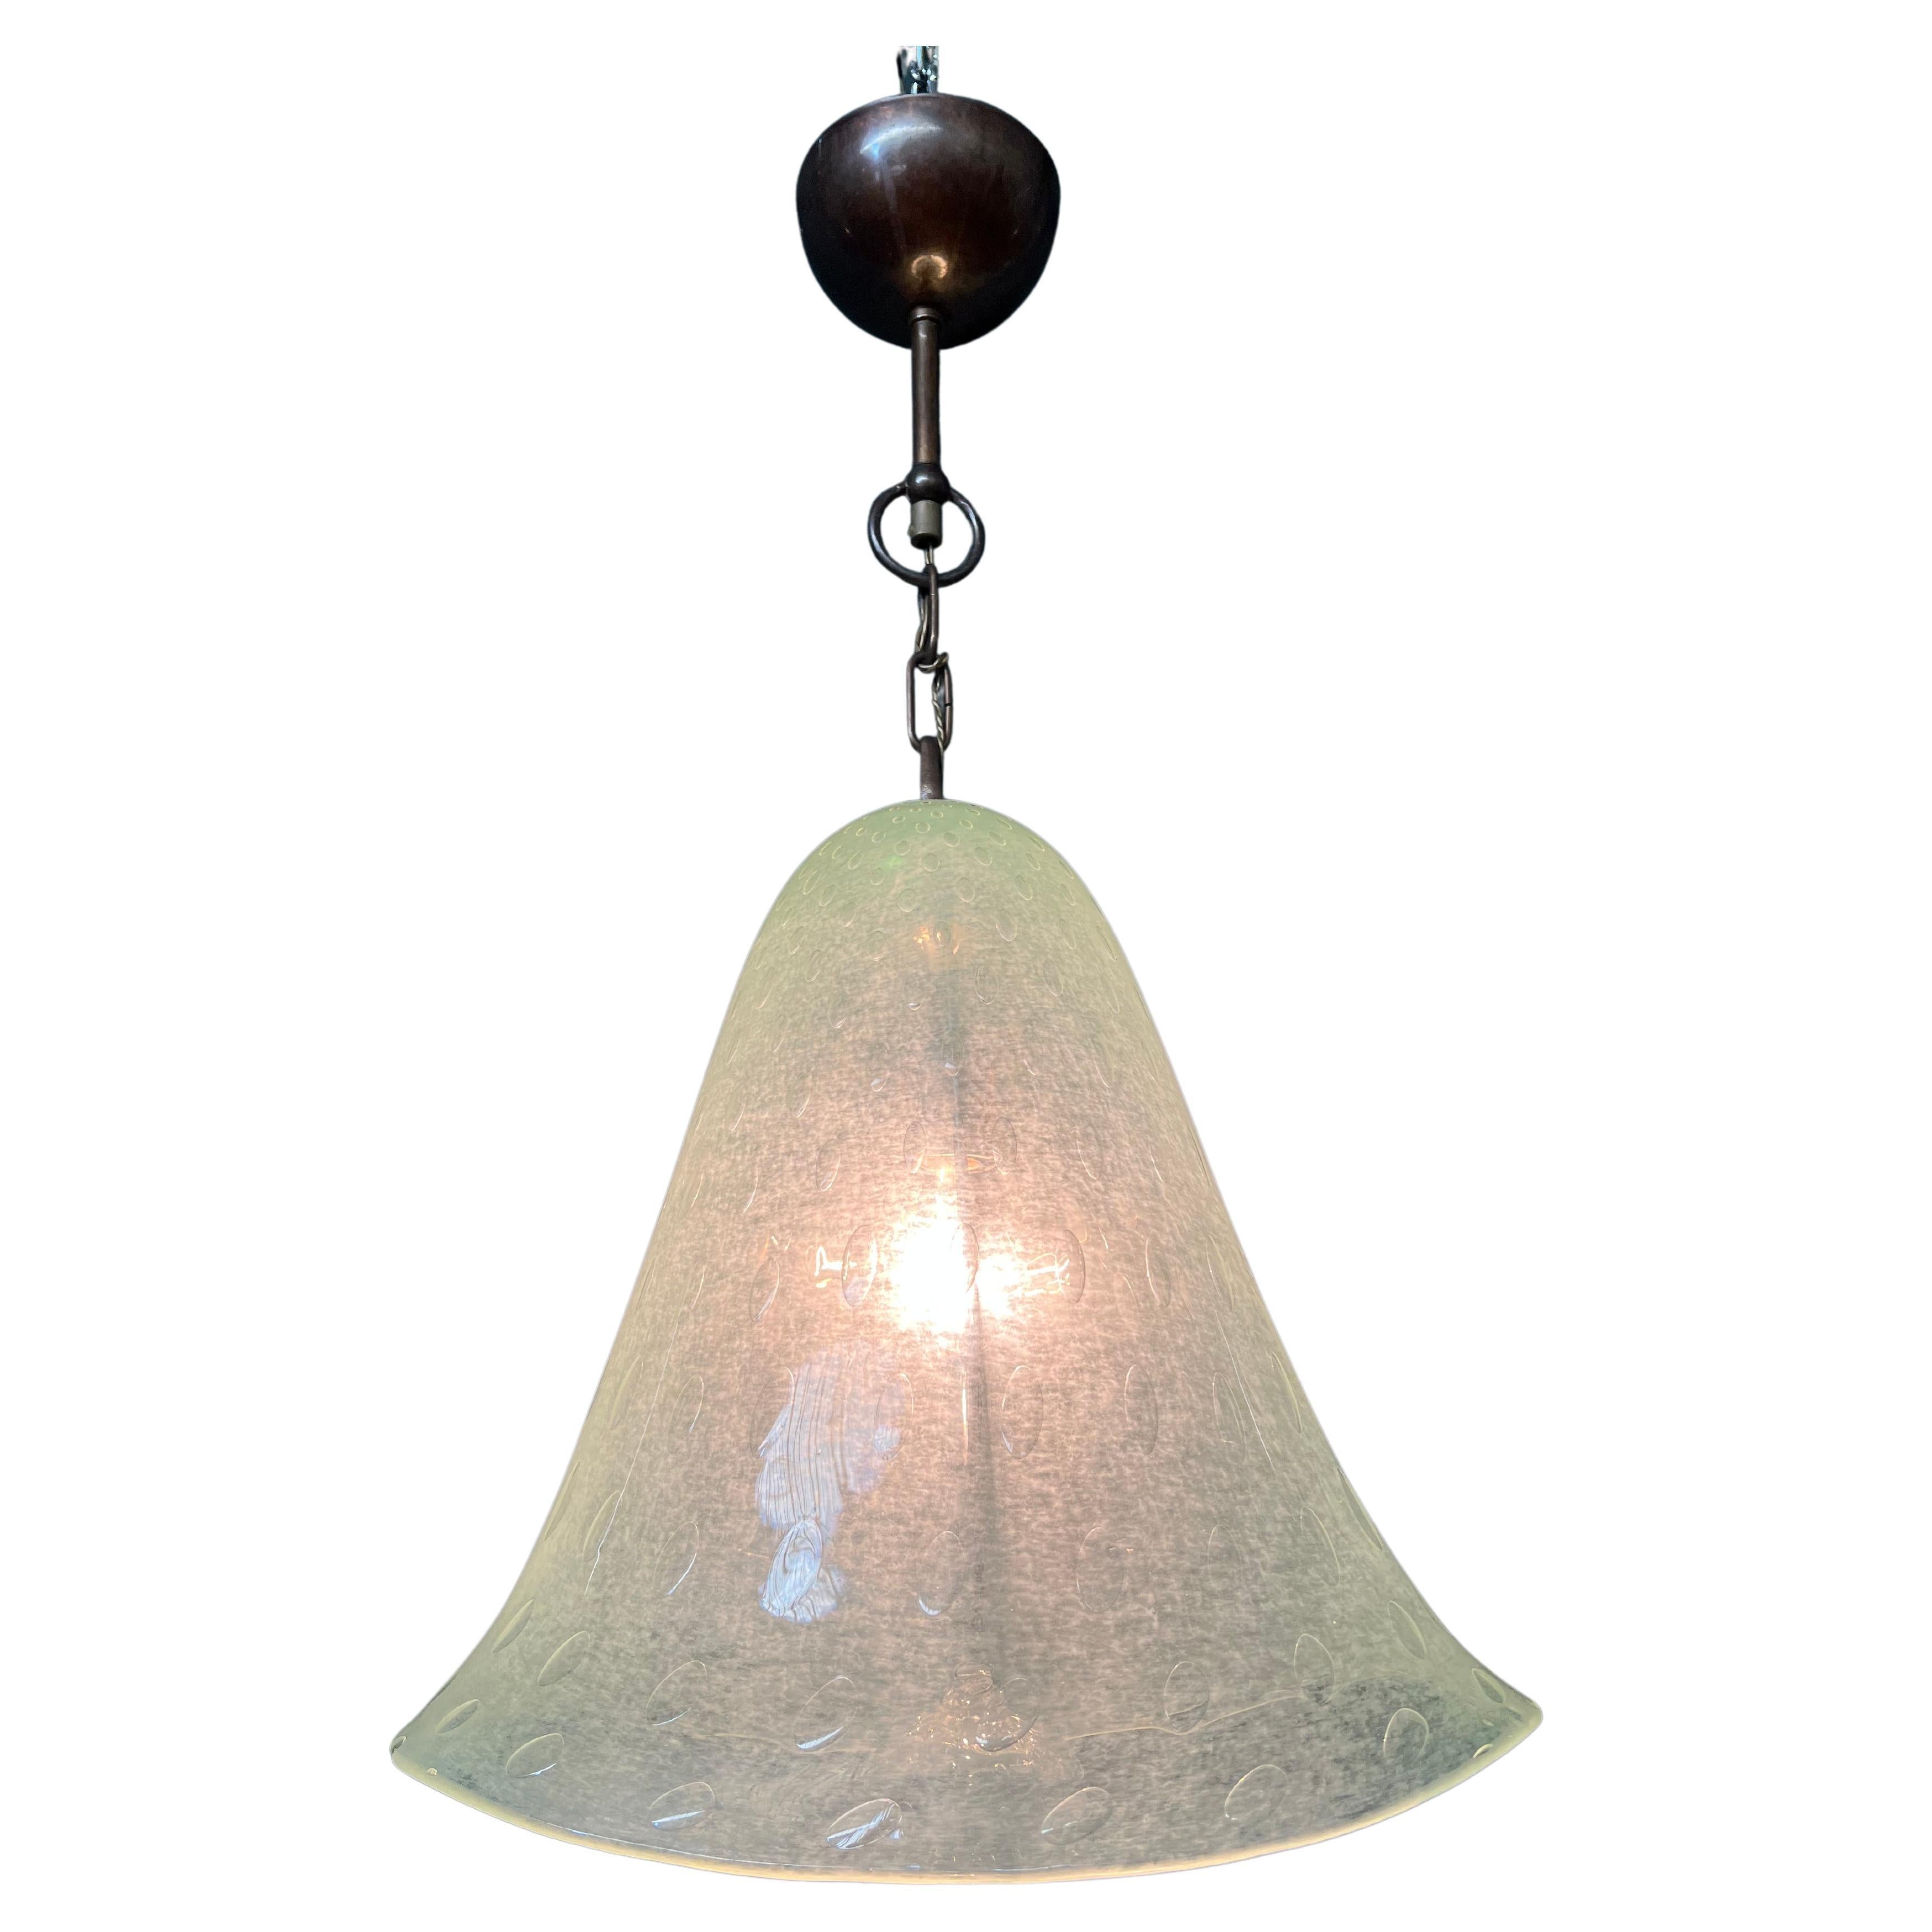 Lantern chandelier by Barovier & Toso, Murano